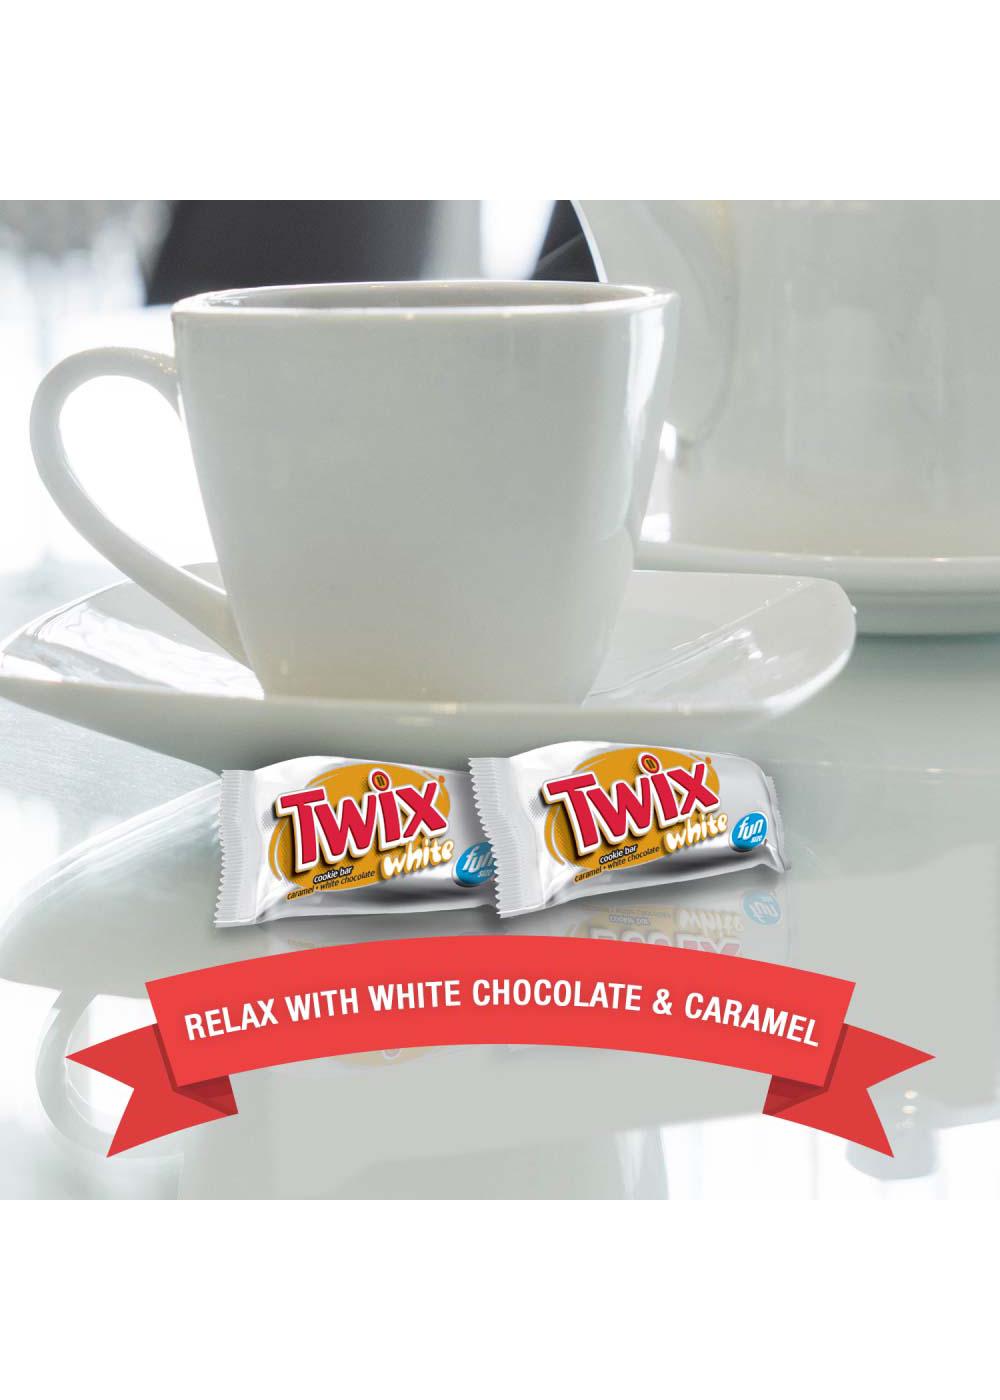 Twix Caramel White Chocolate Fun Size Cookie Bar Candy Bag; image 4 of 7